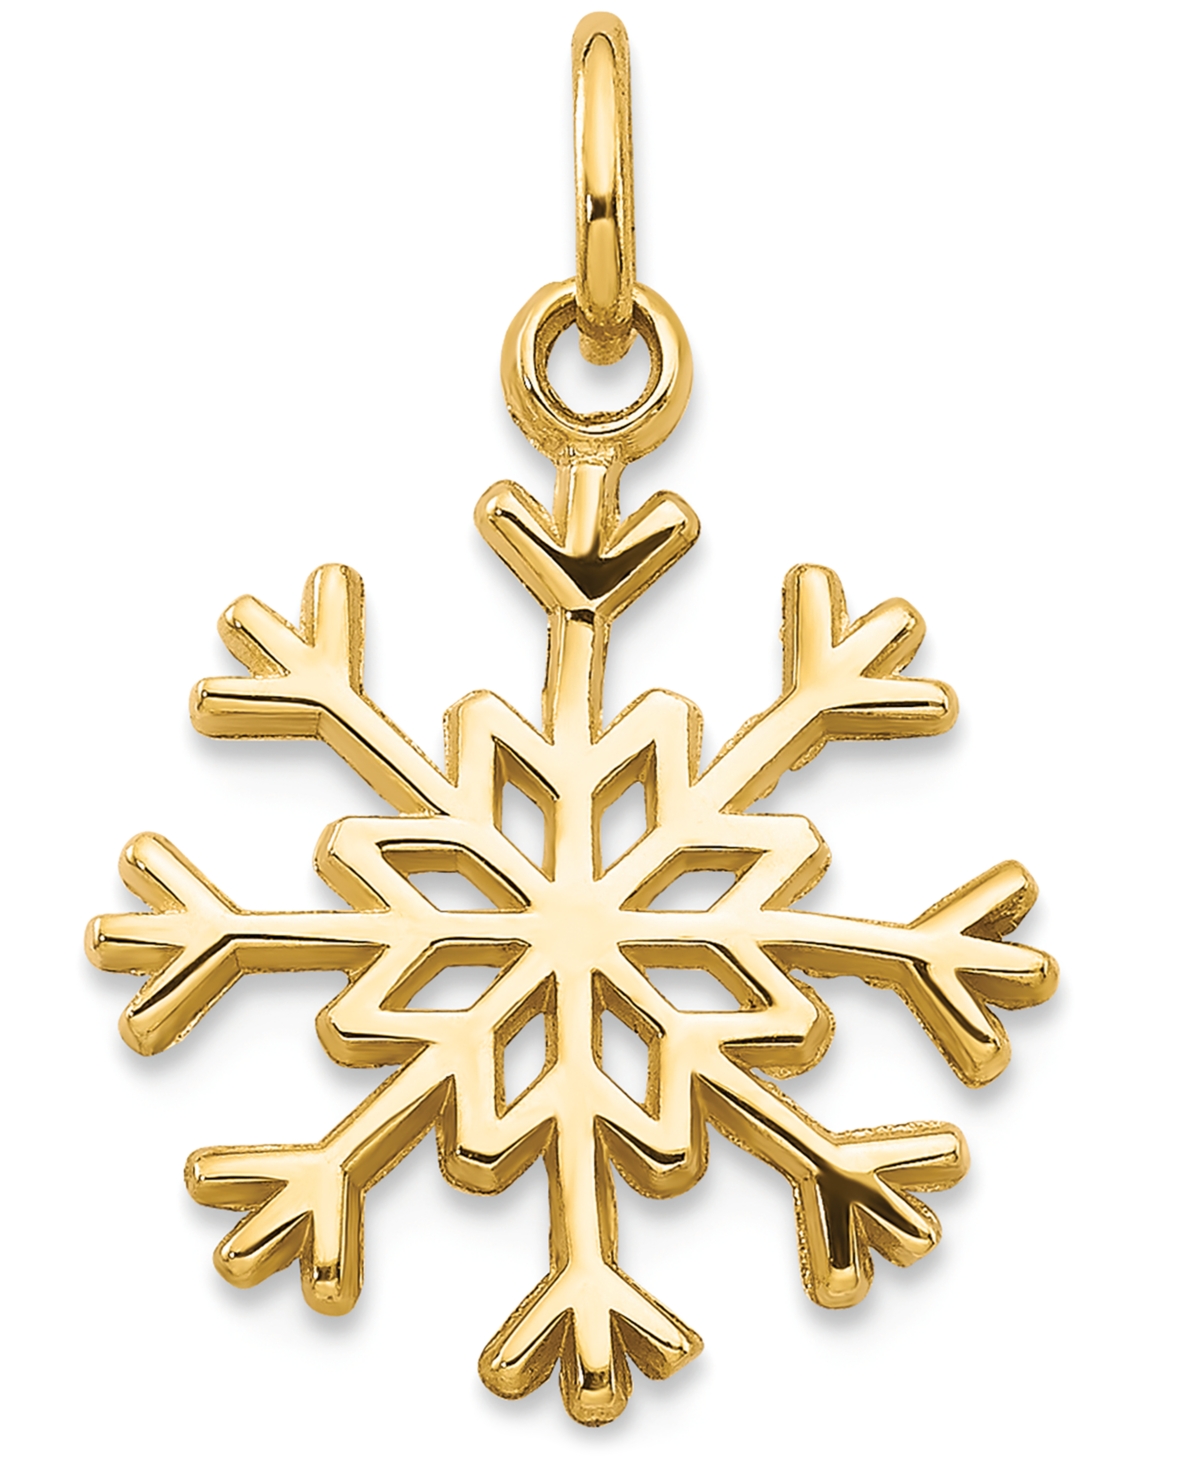 Snowflake Charm Pendant in 14k Yellow Gold - Yellow Gold